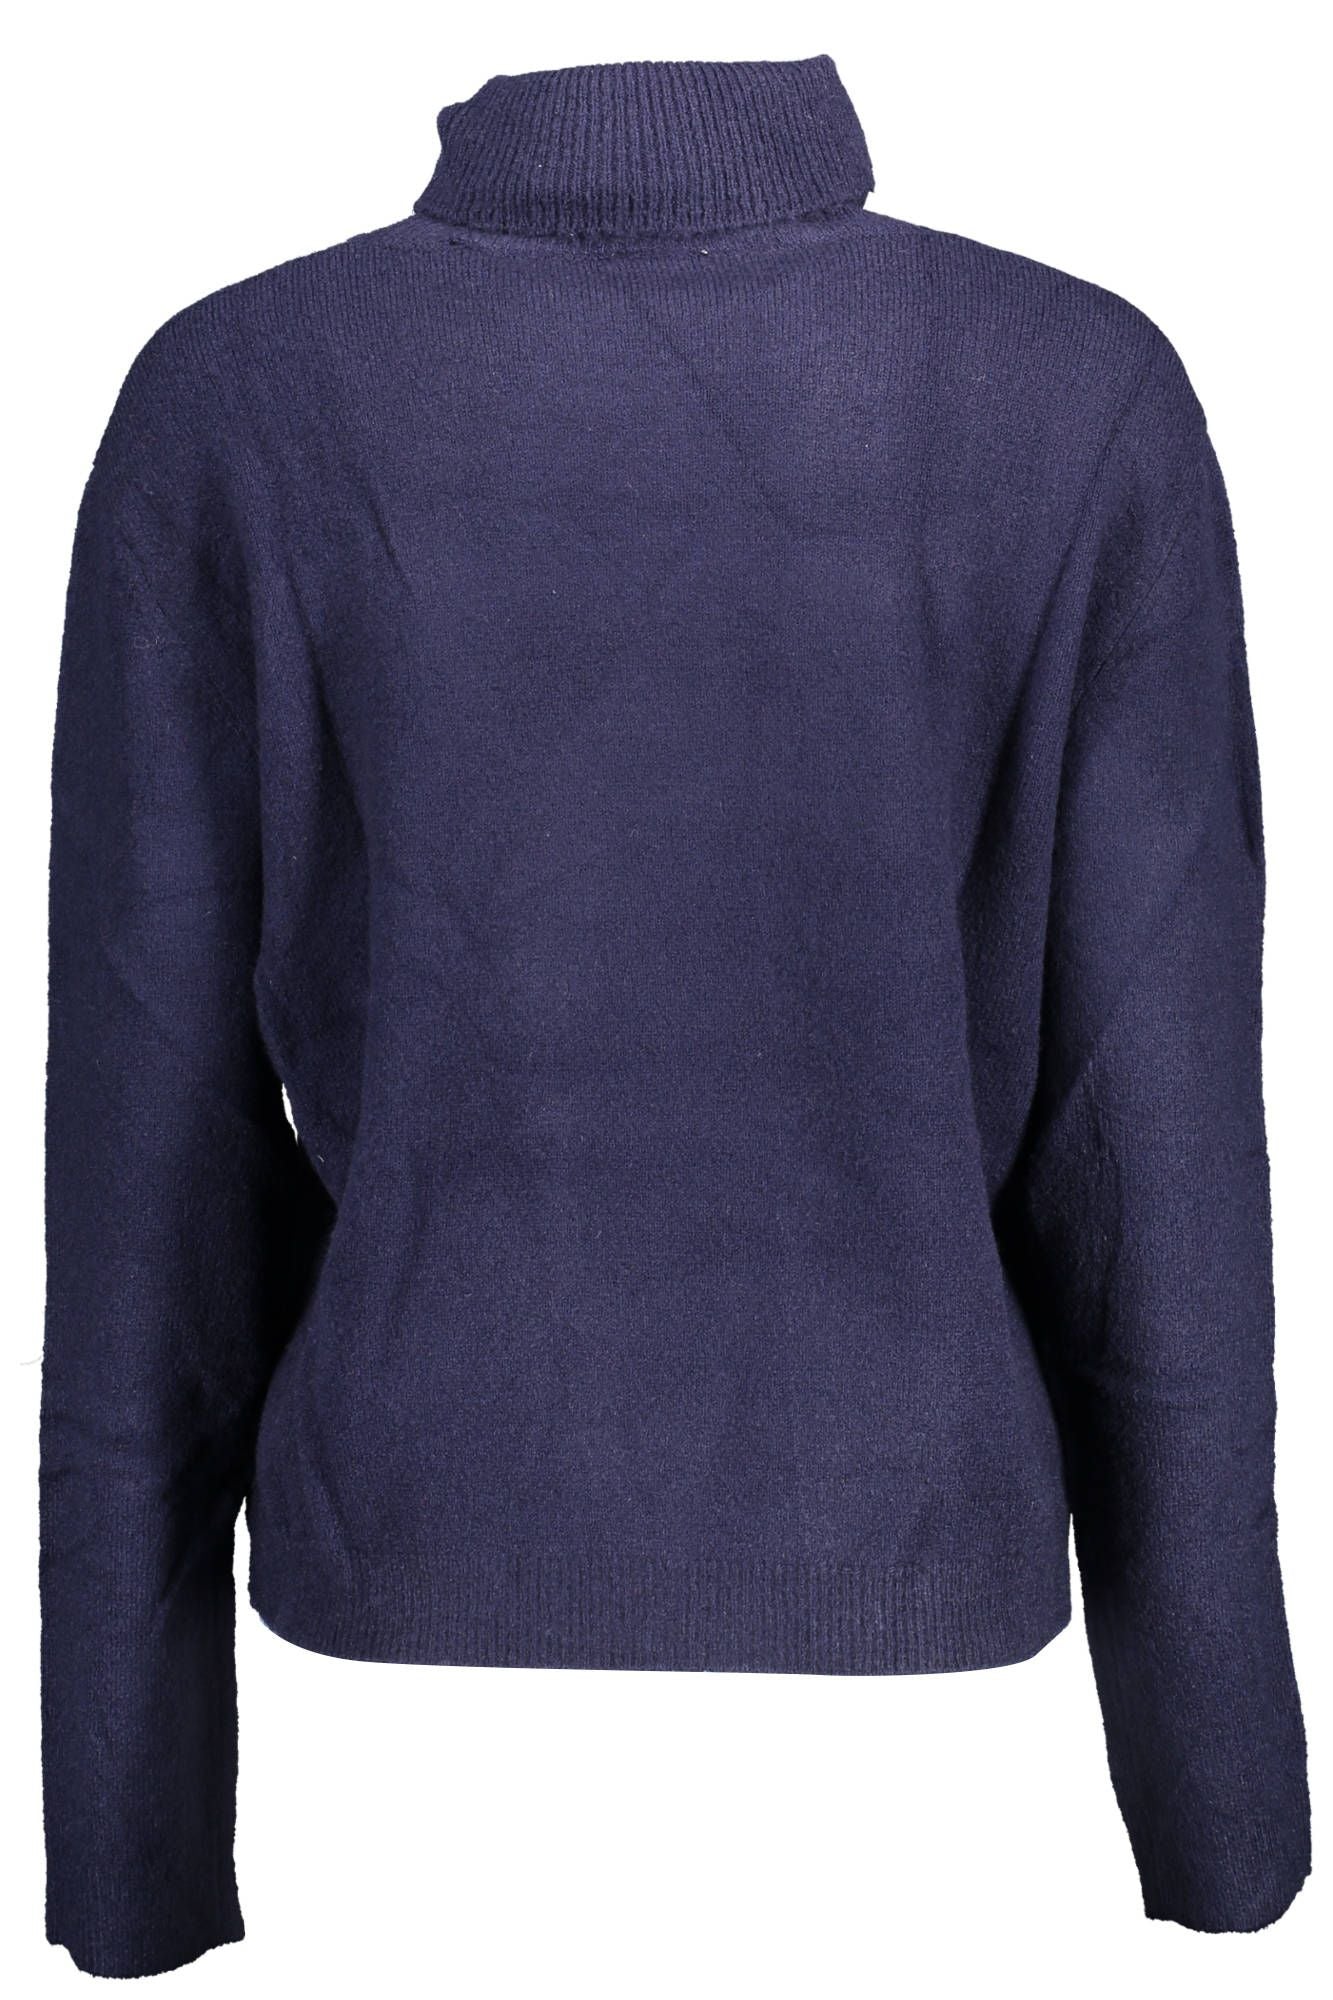 U.S. Polo Assn. Blue Nylon Sweater